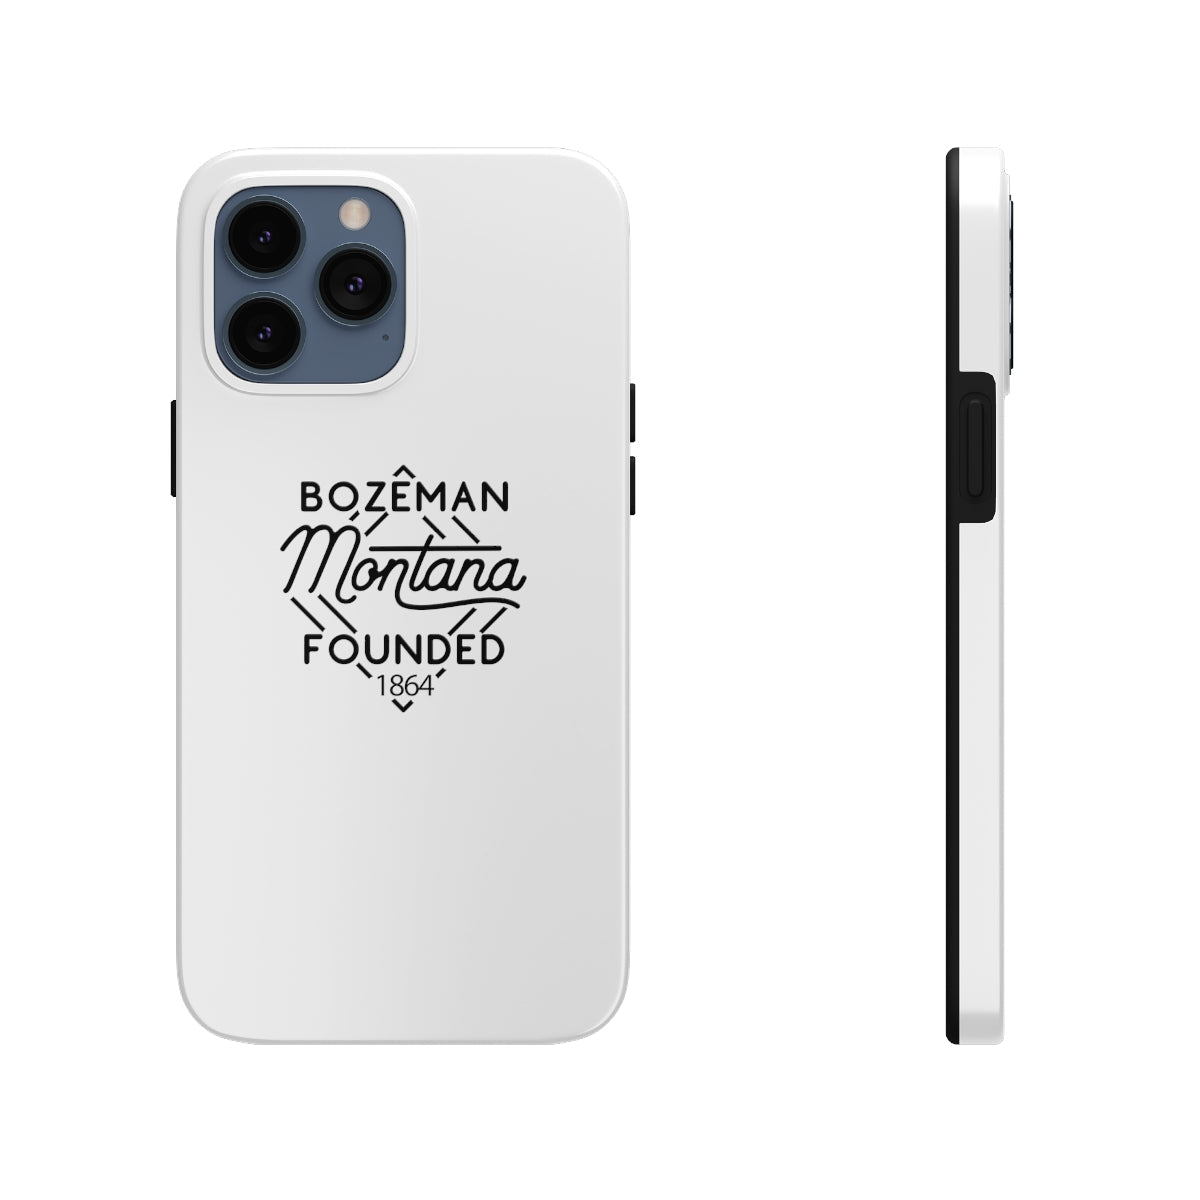 White iphone 13 pro max case for Bozeman, Montana